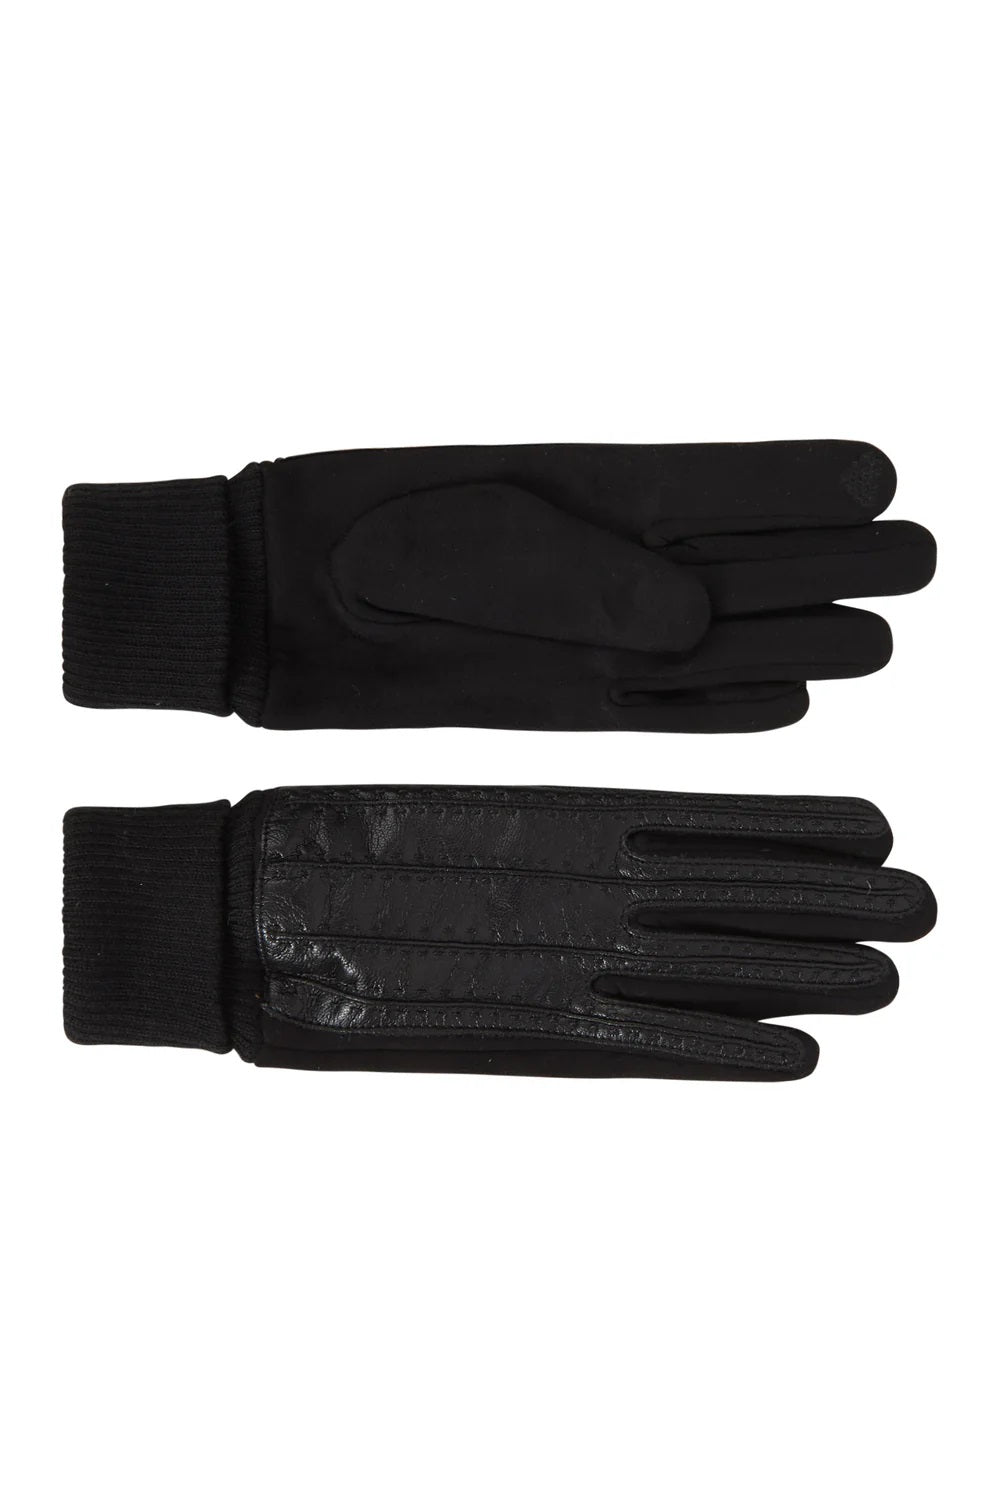 Eb & Ive Pilbara Glove - Graphite